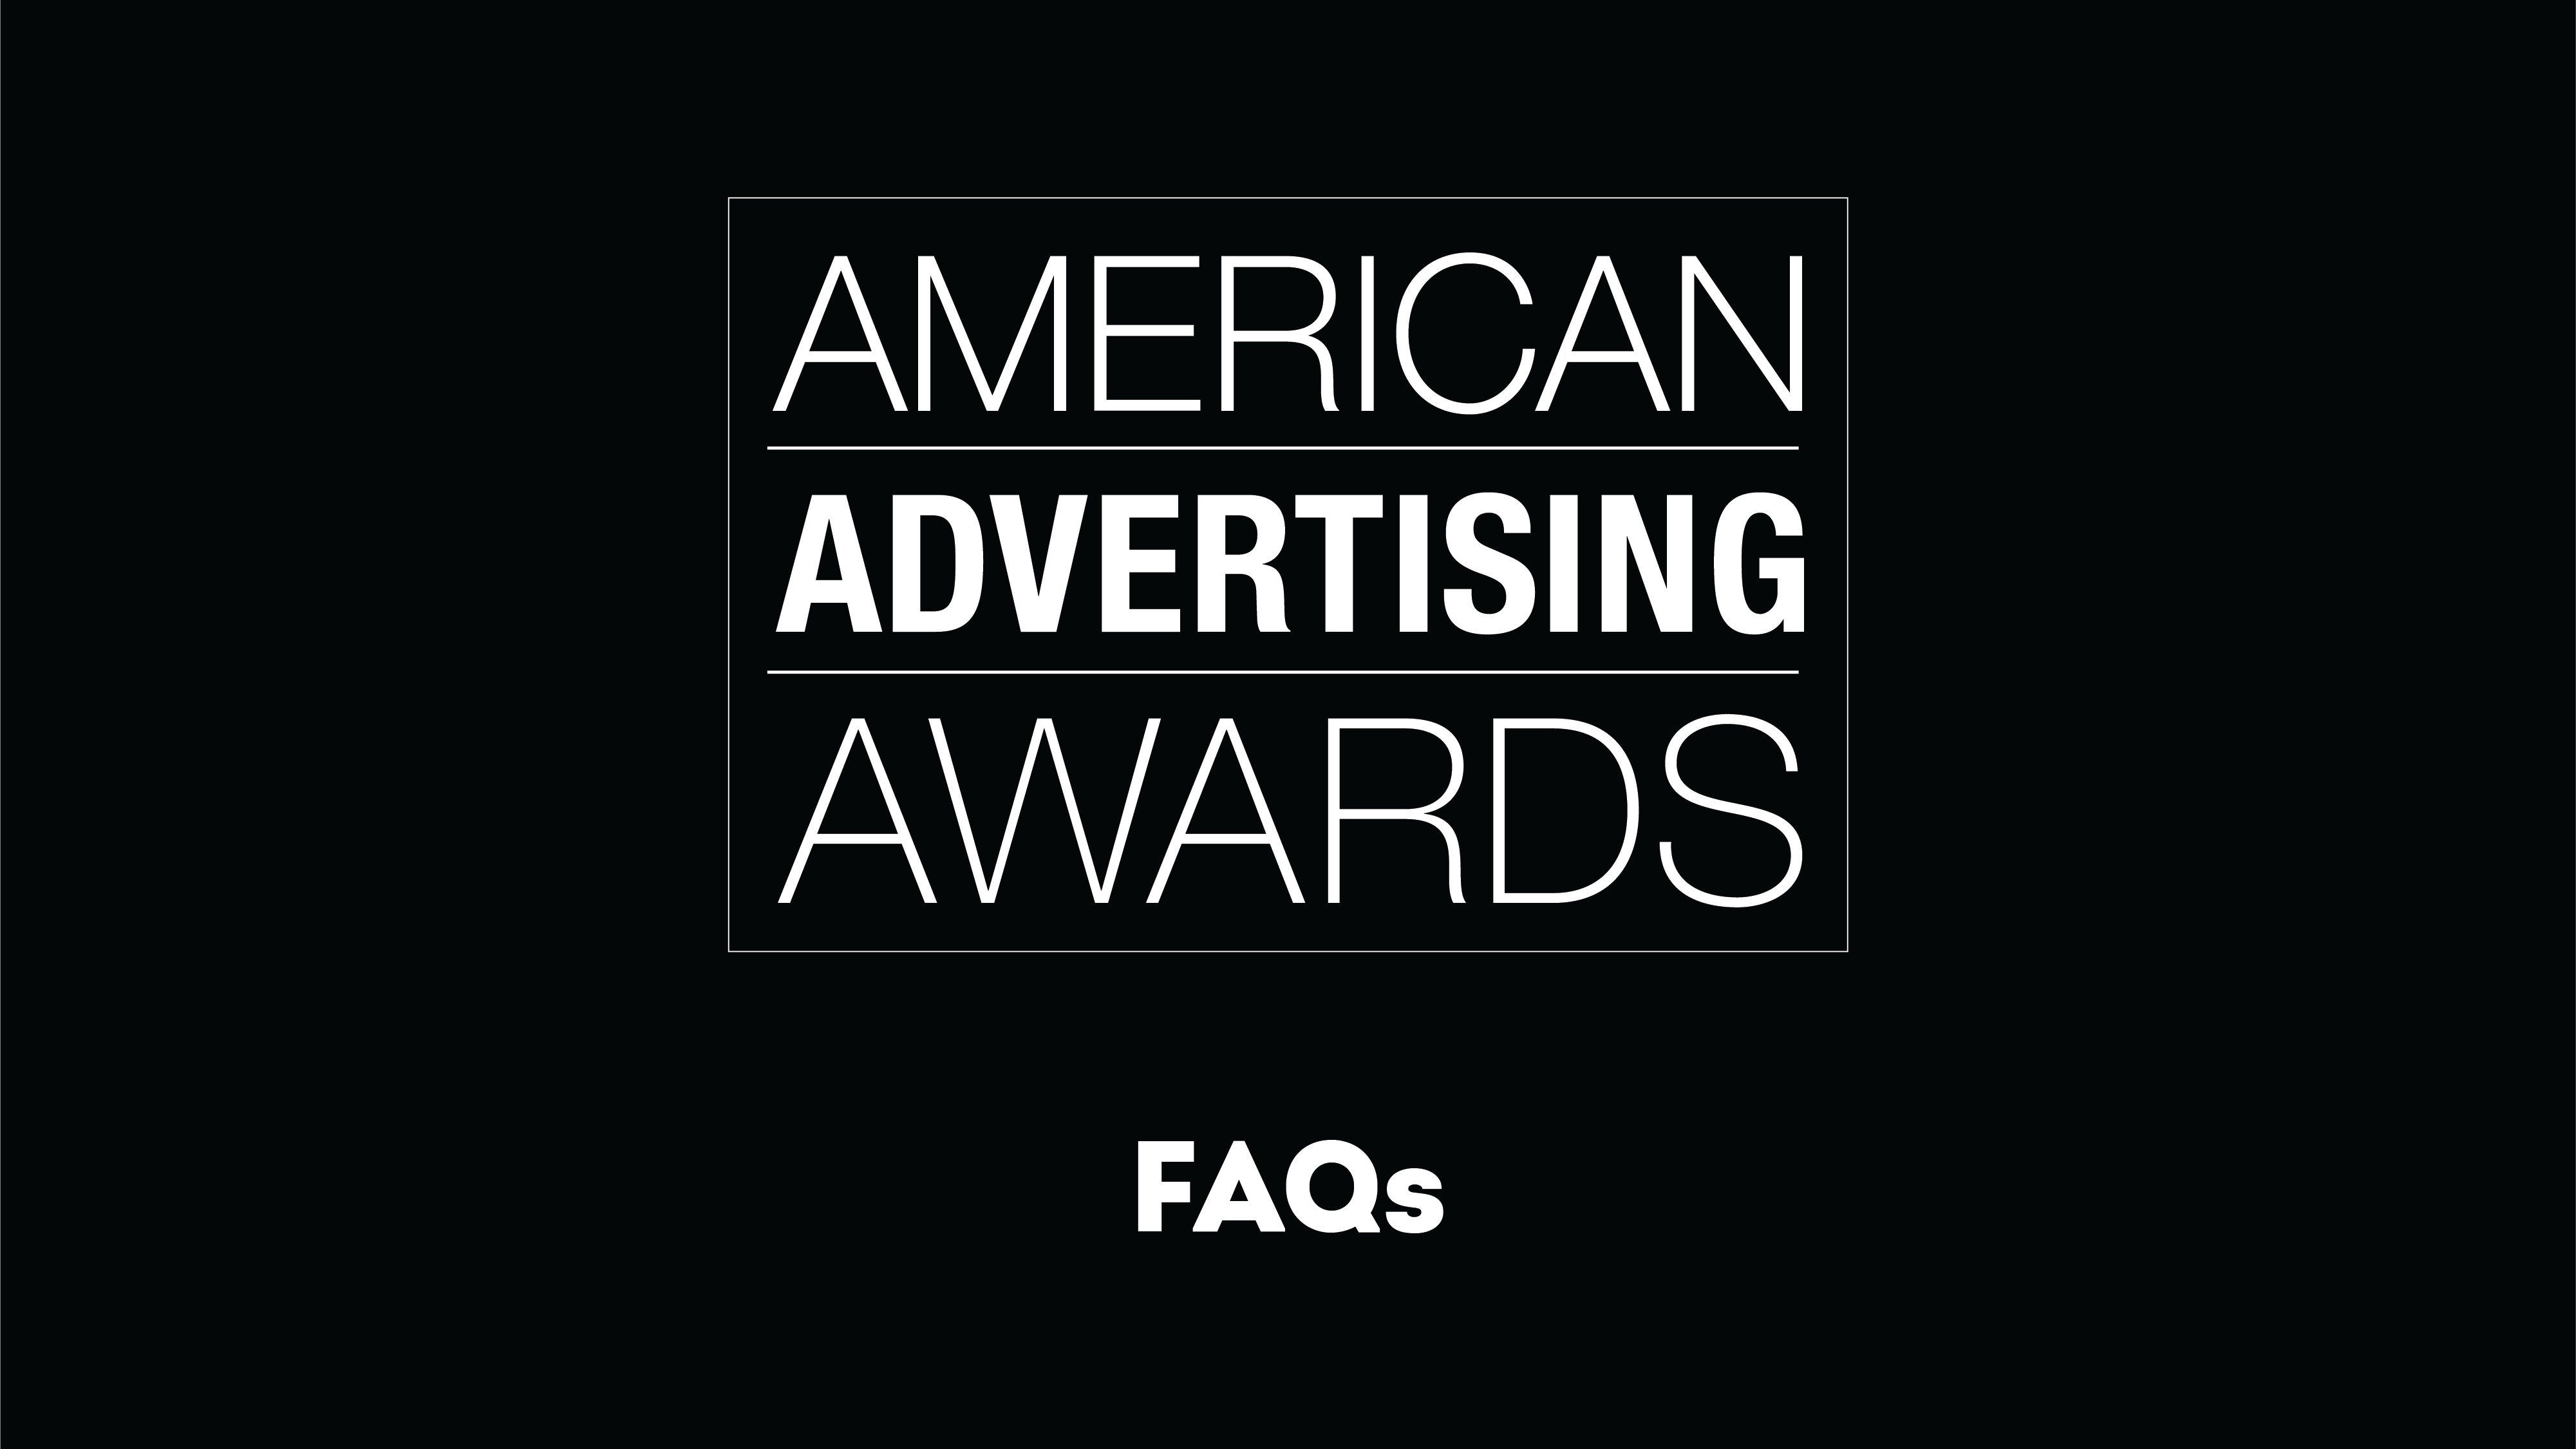 AAFCM American Advertising Awards FAQ